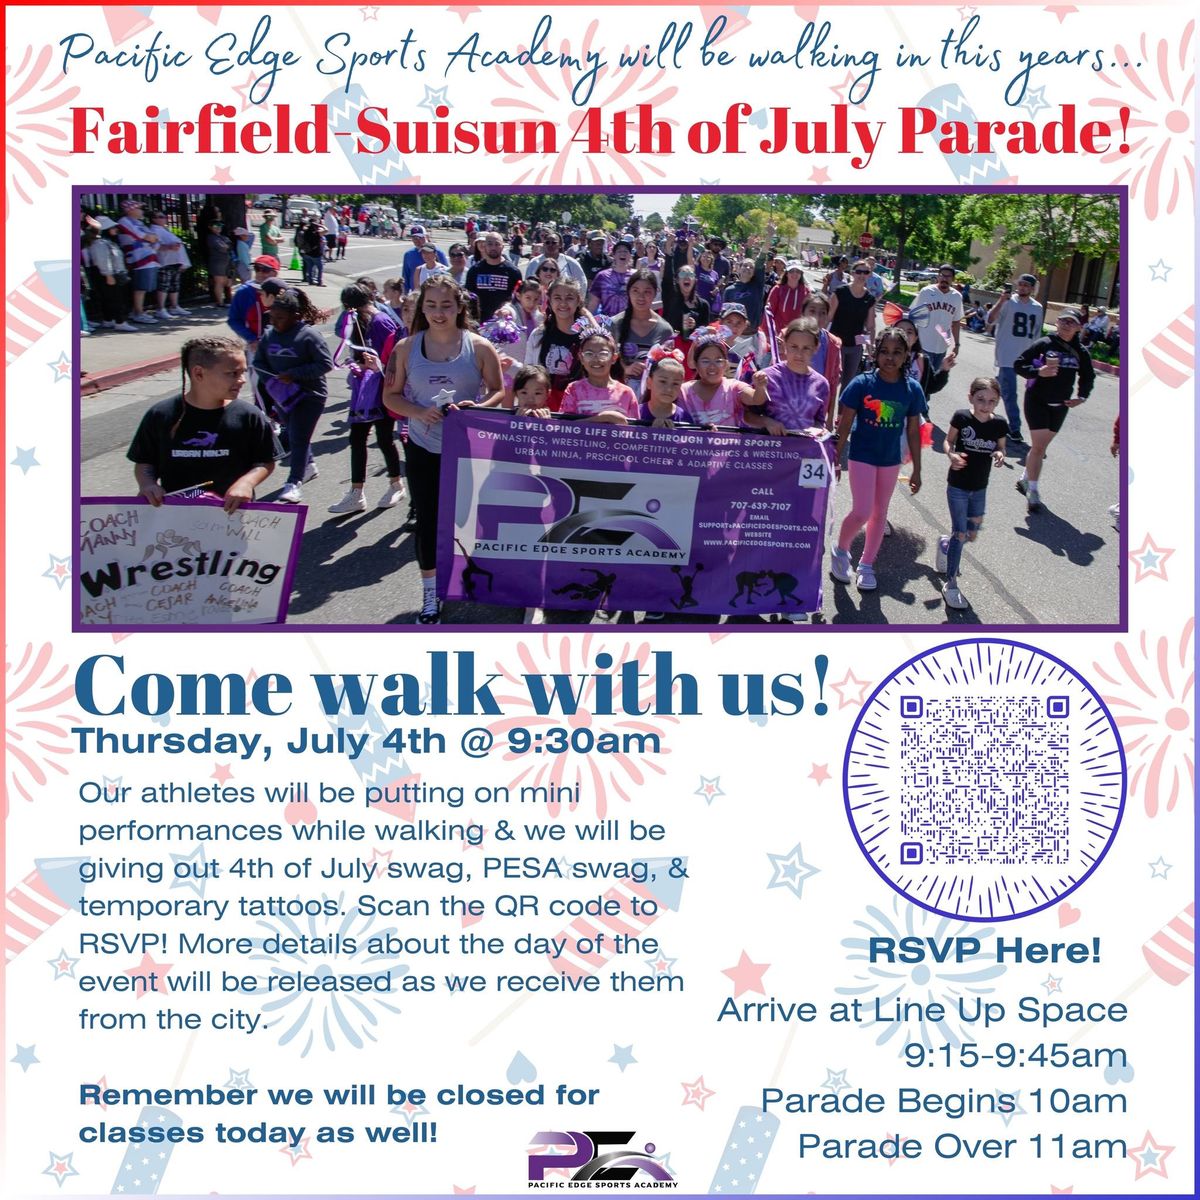 Fairfield-Suisun 4th of July Parade!